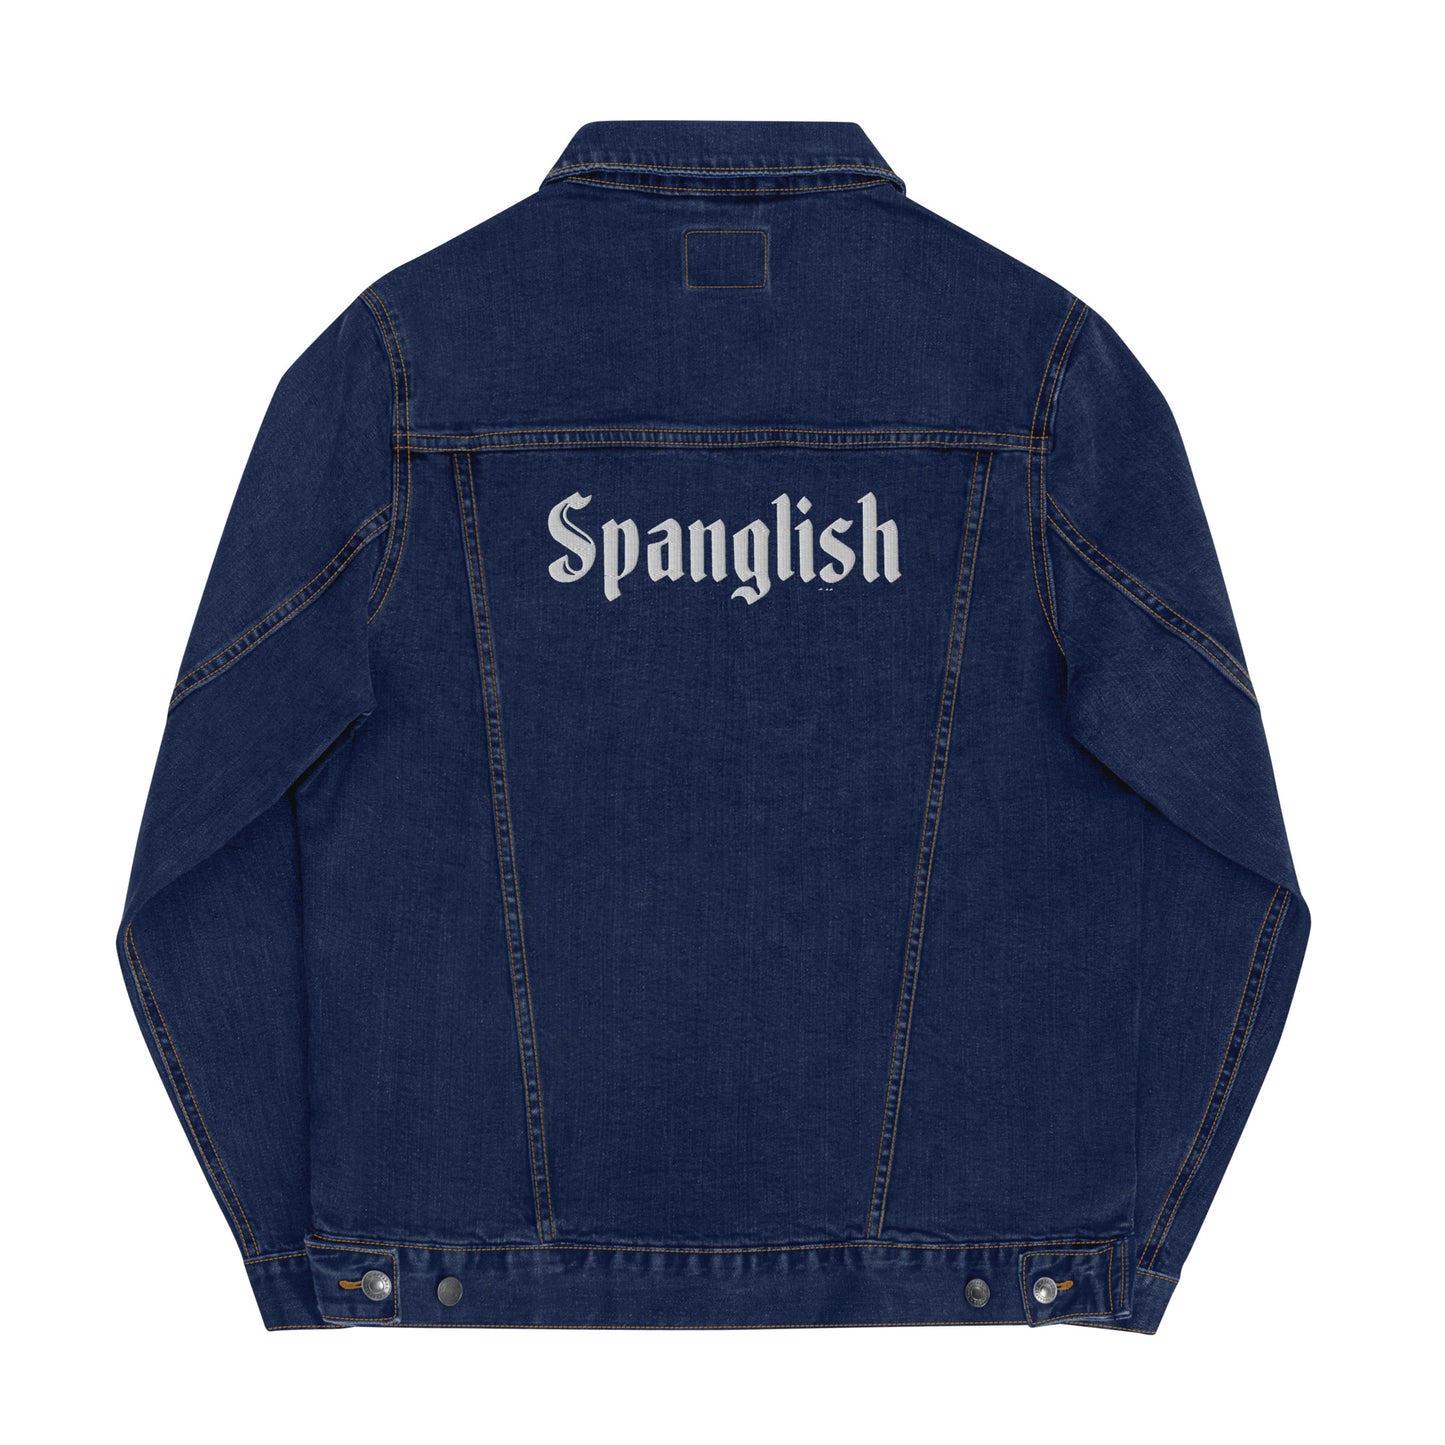 Spanglish Denim Jacket